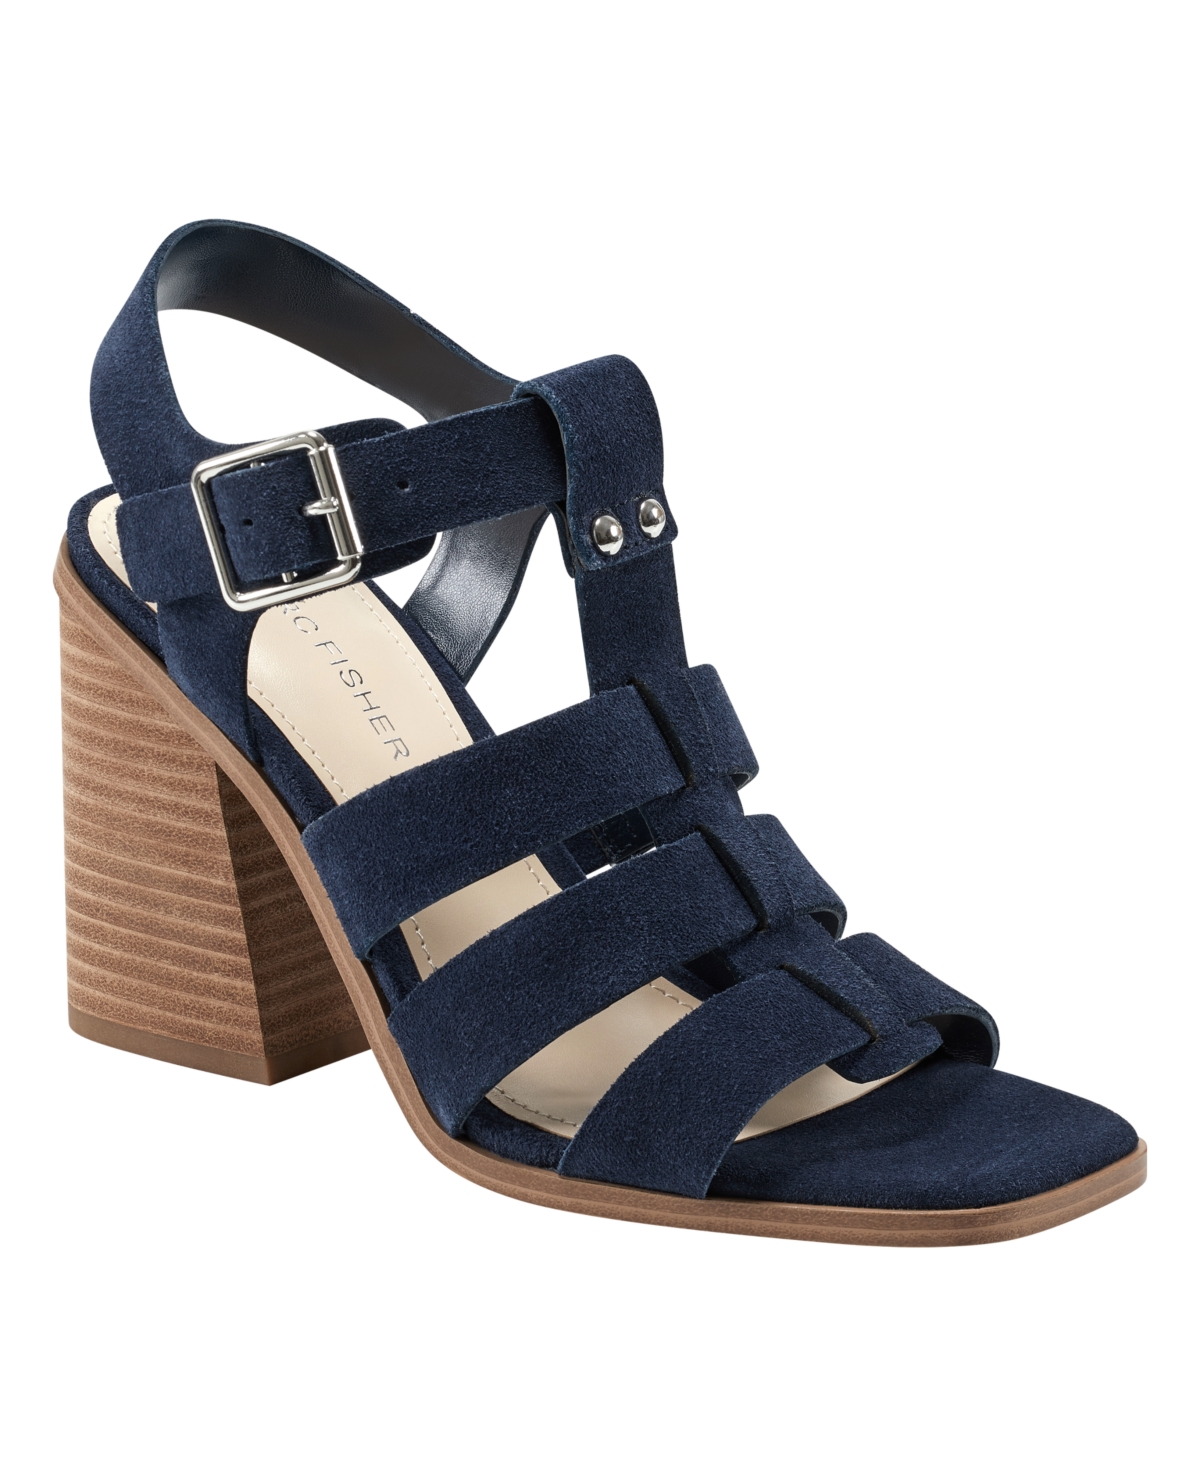 Women's Fynlee Block Heel Slip-on Dress Sandals - Dark Blue Suede